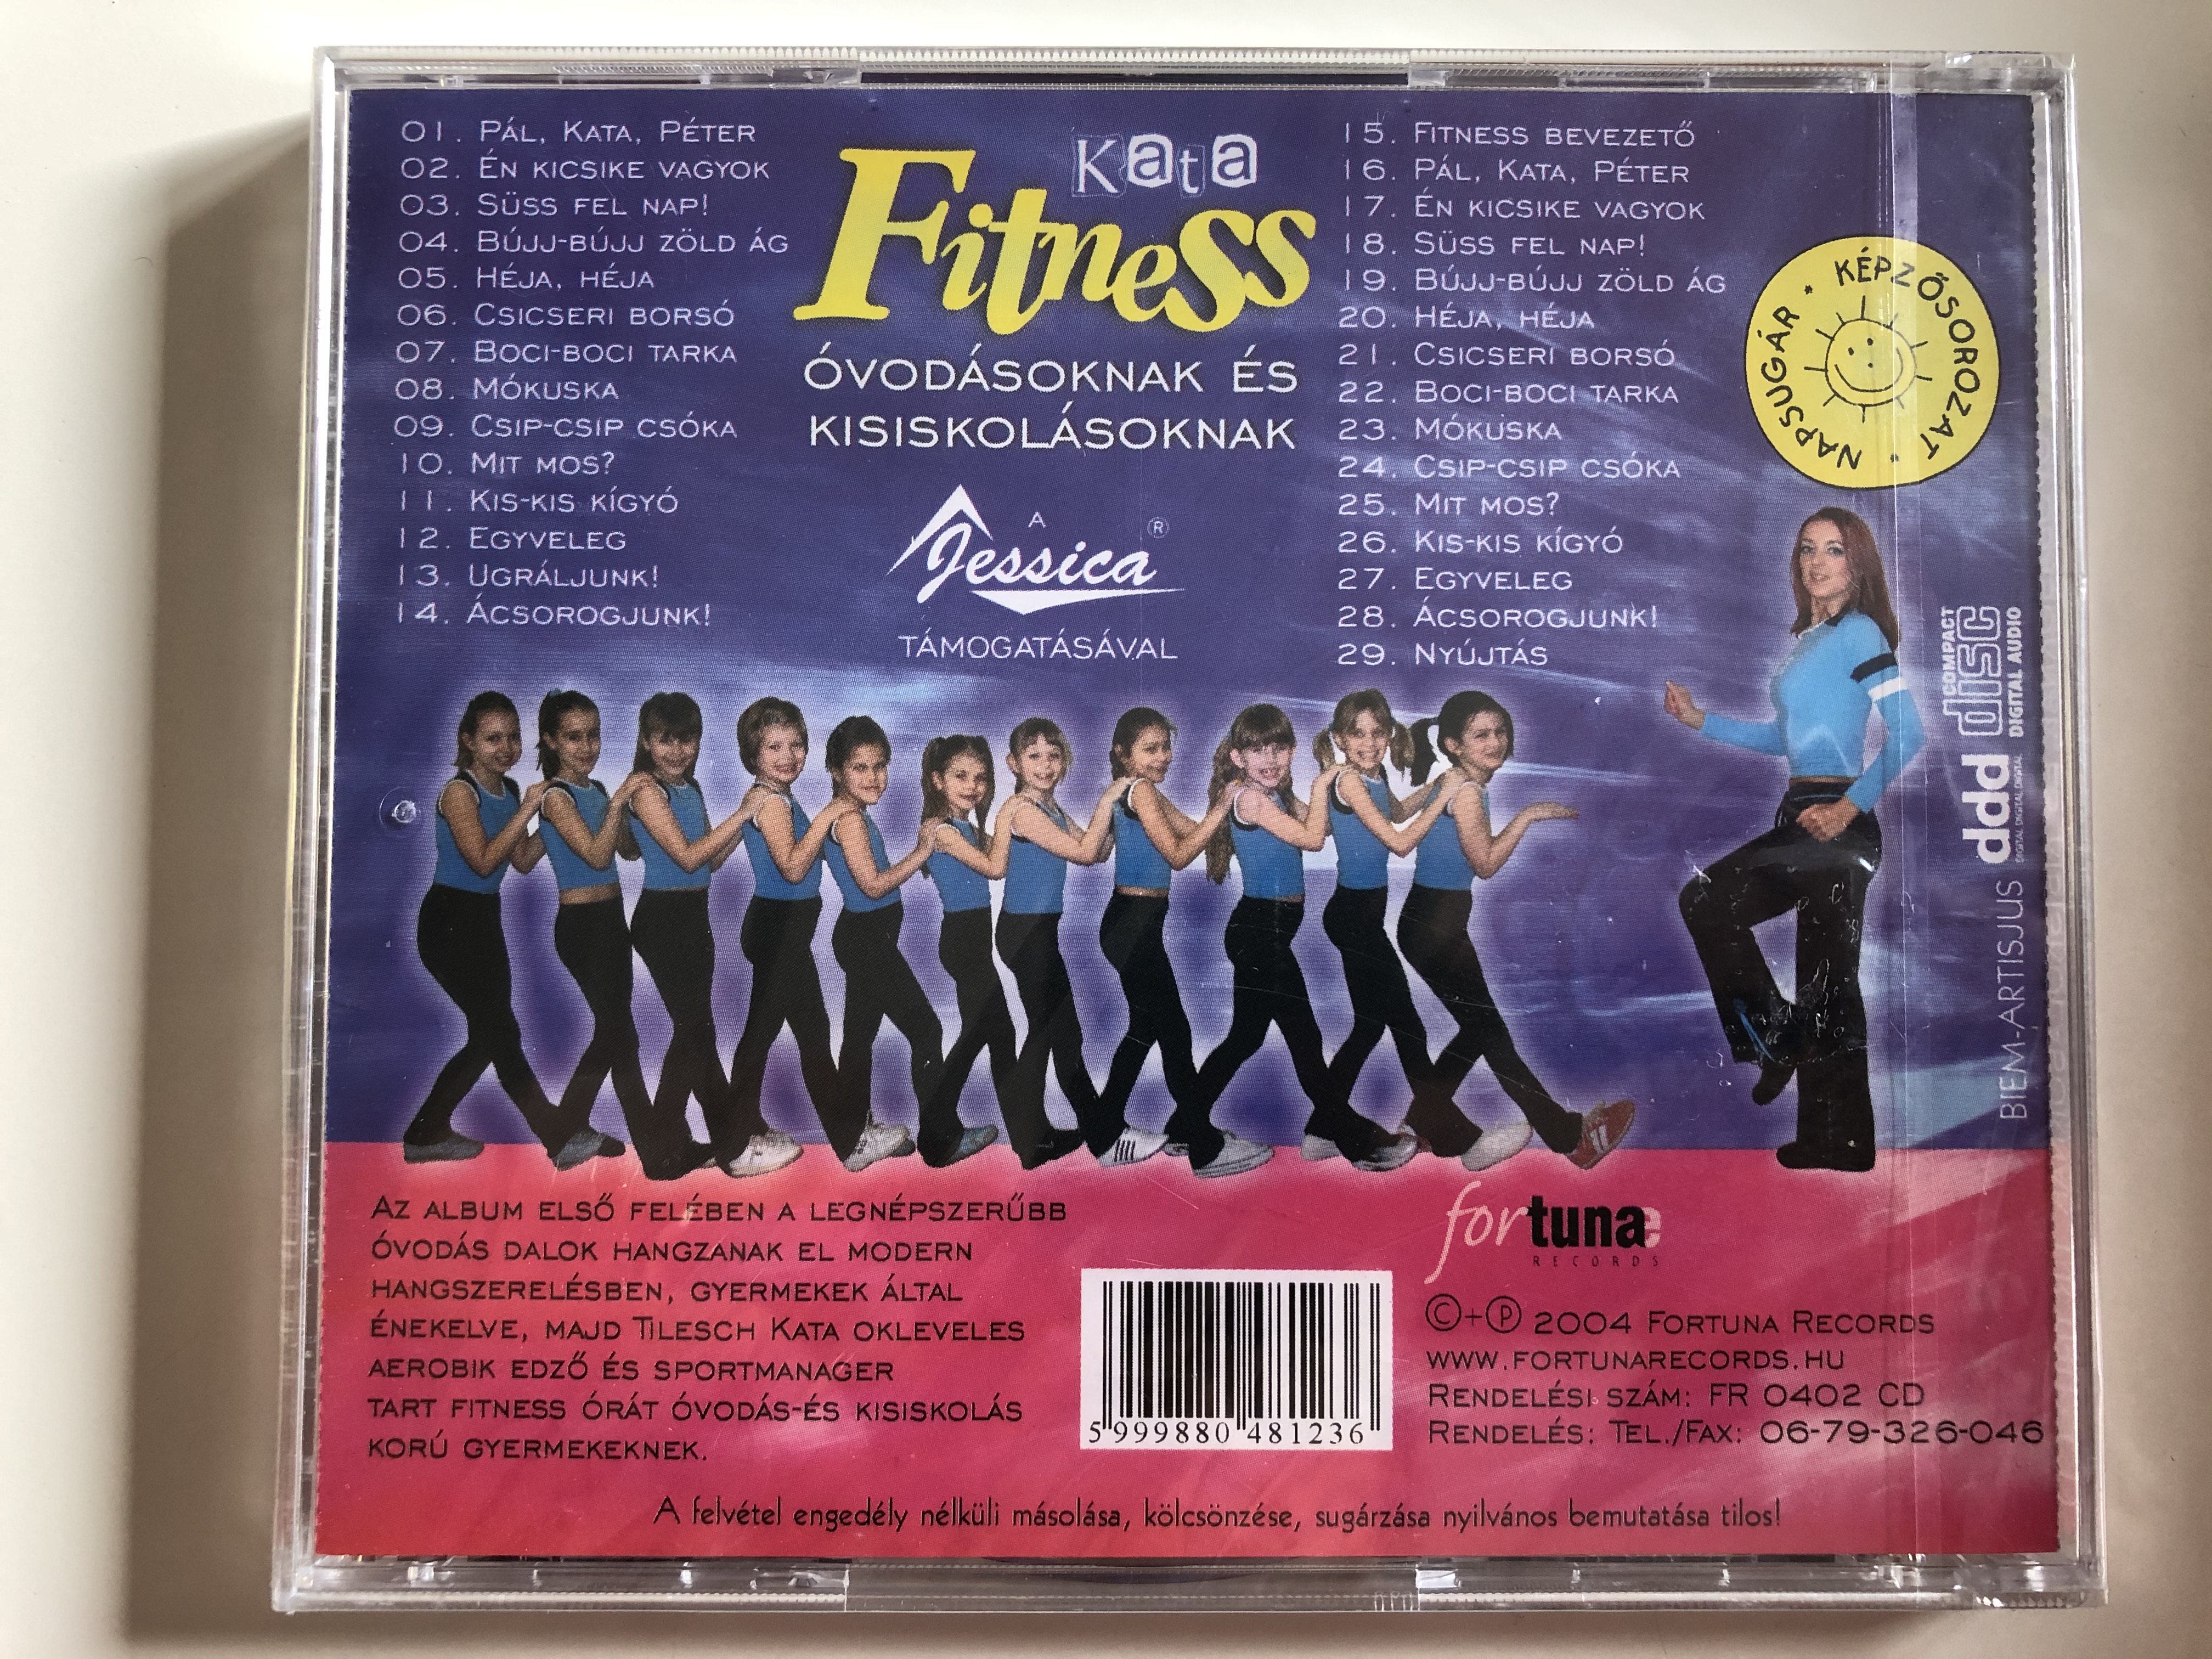 kata-fitness-ovodasoknak-es-kisiskolasoknak-a-gyakorlatok-illusztracioi-megtalalhatok-a-borito-belsejeren-fortuna-records-audio-cd-2004-fr-0402-cd-2-.jpg